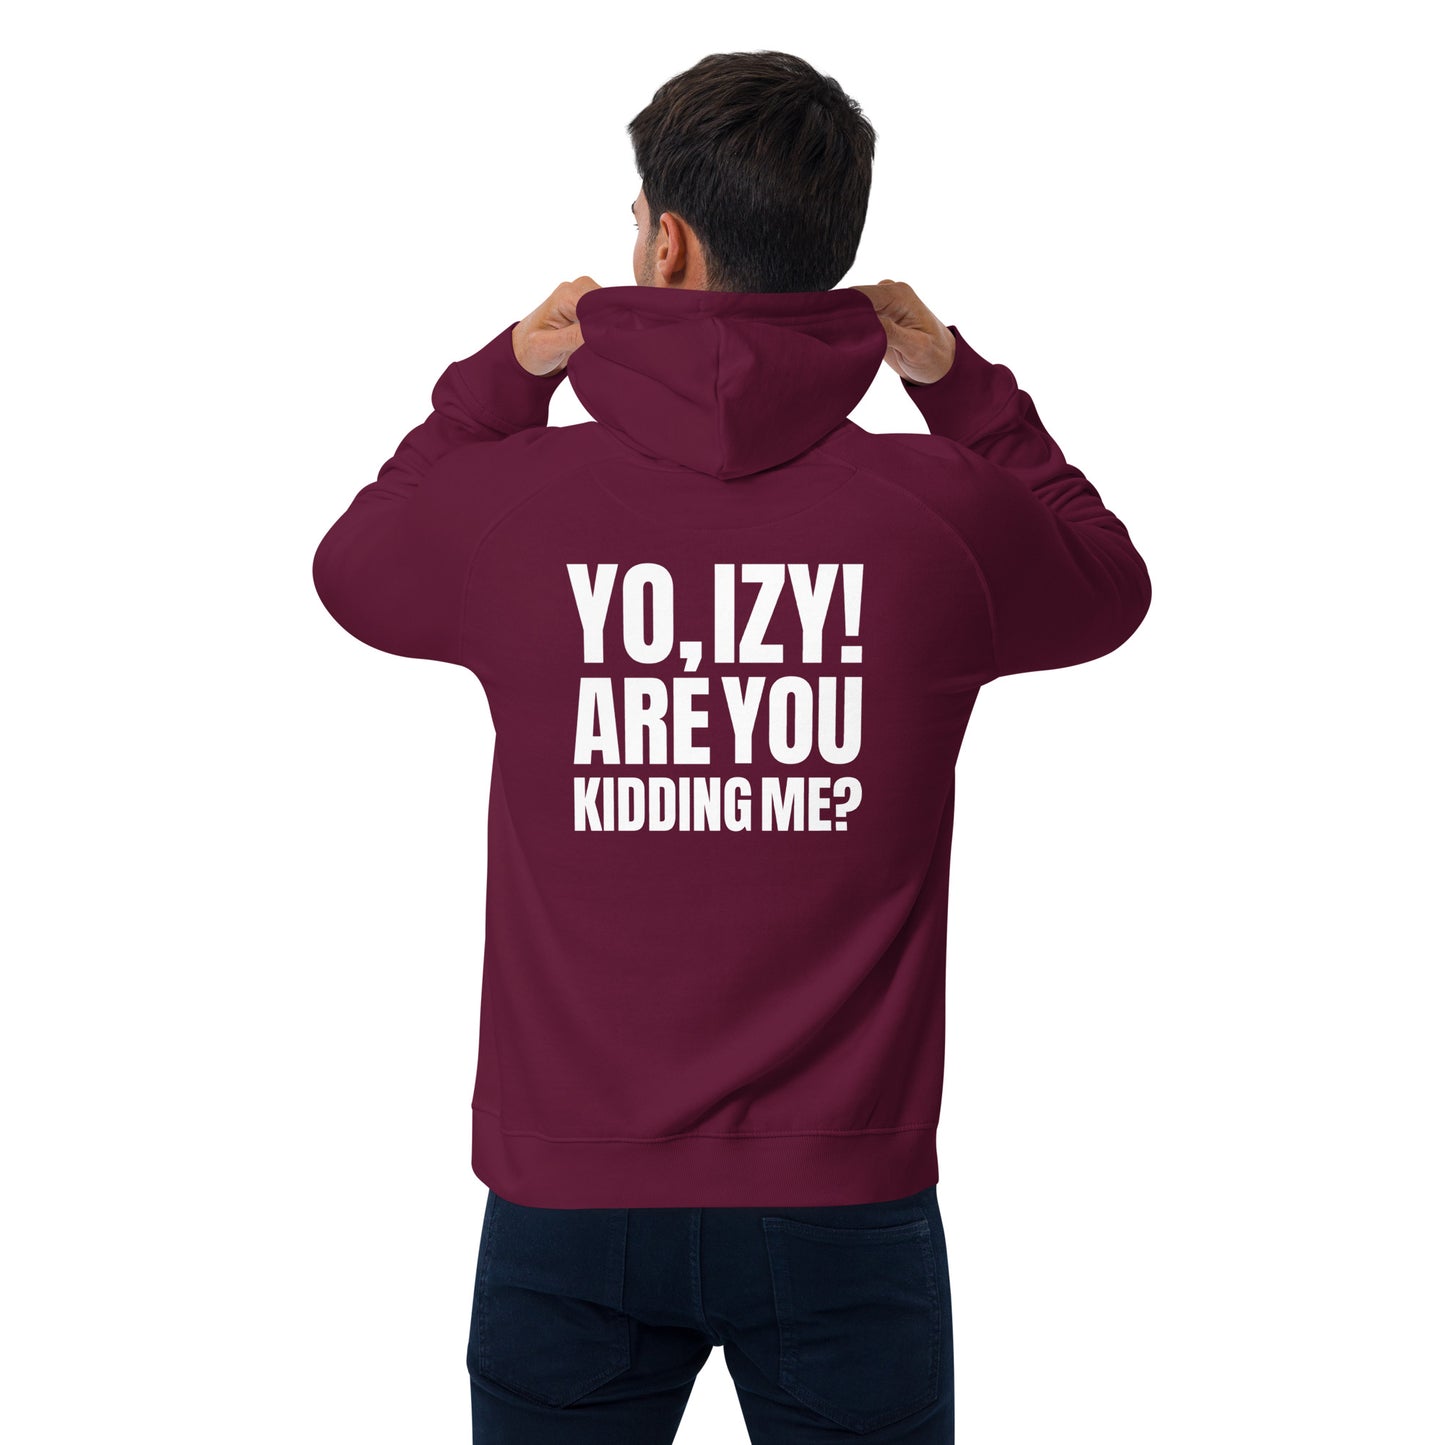 Unisex “Yo,Izy!” eco raglan hoodie